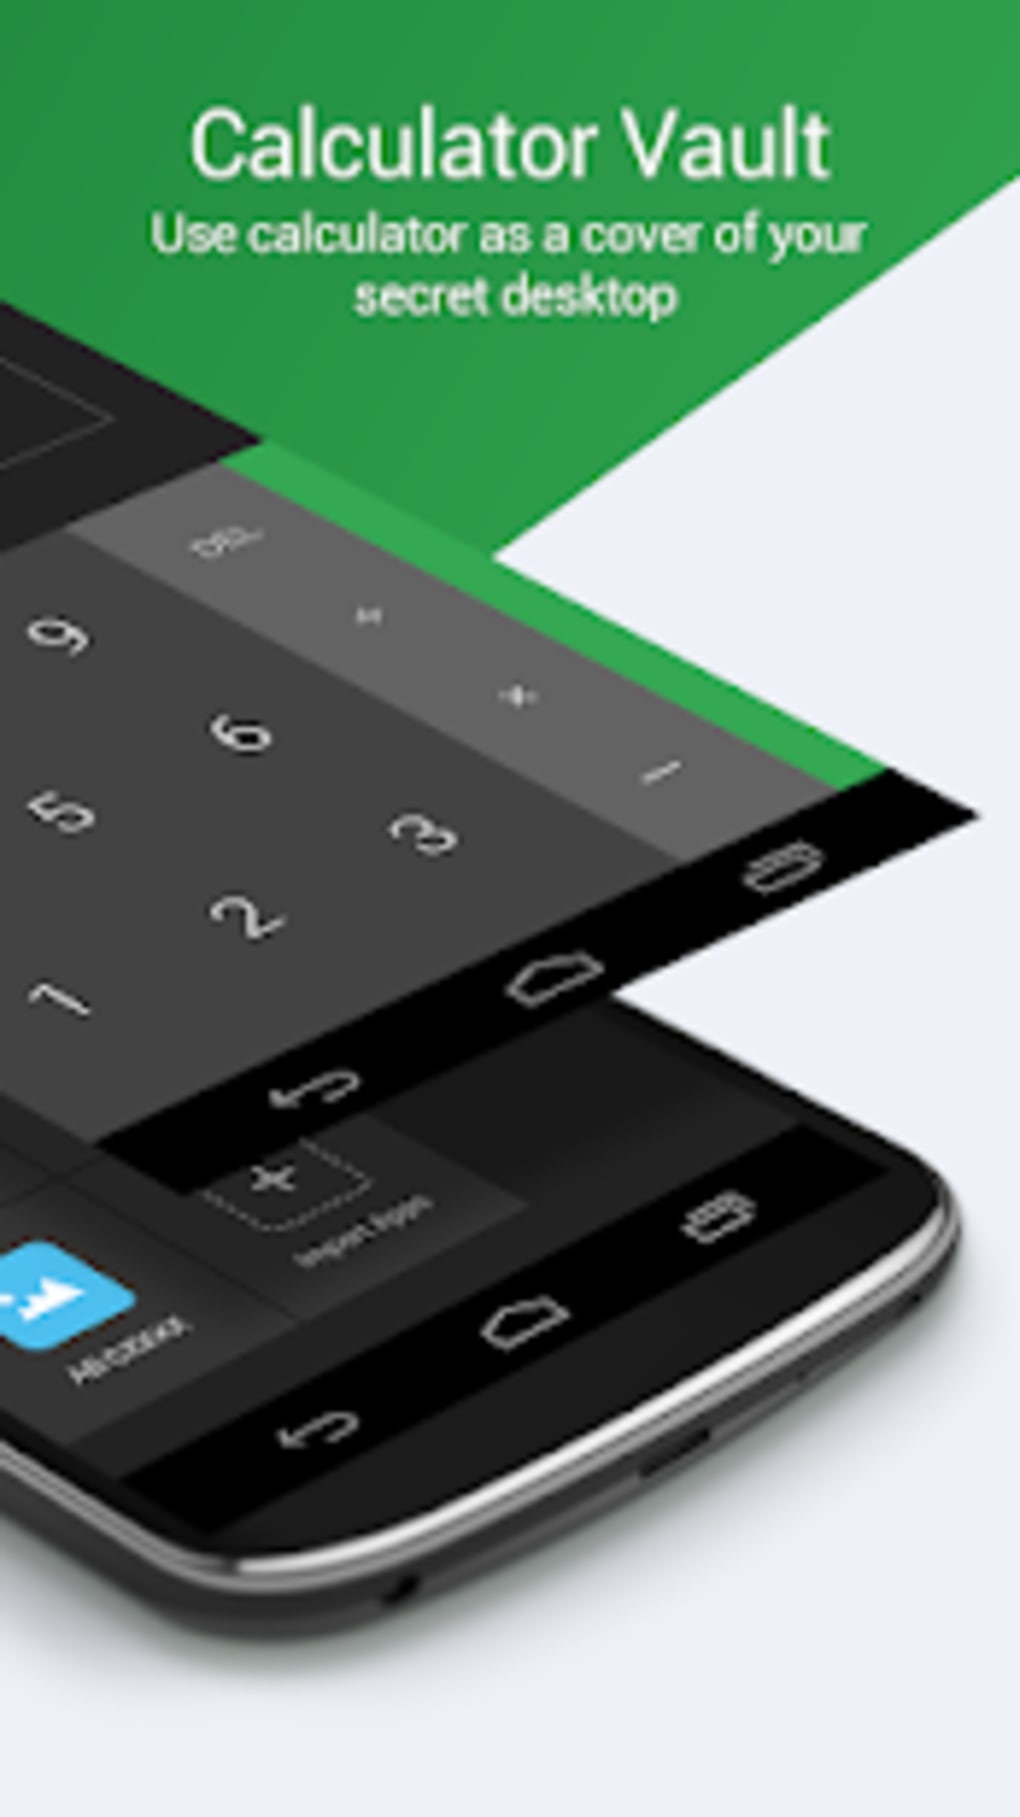 Calculator Vault App Hider Hide Apps For Android Download